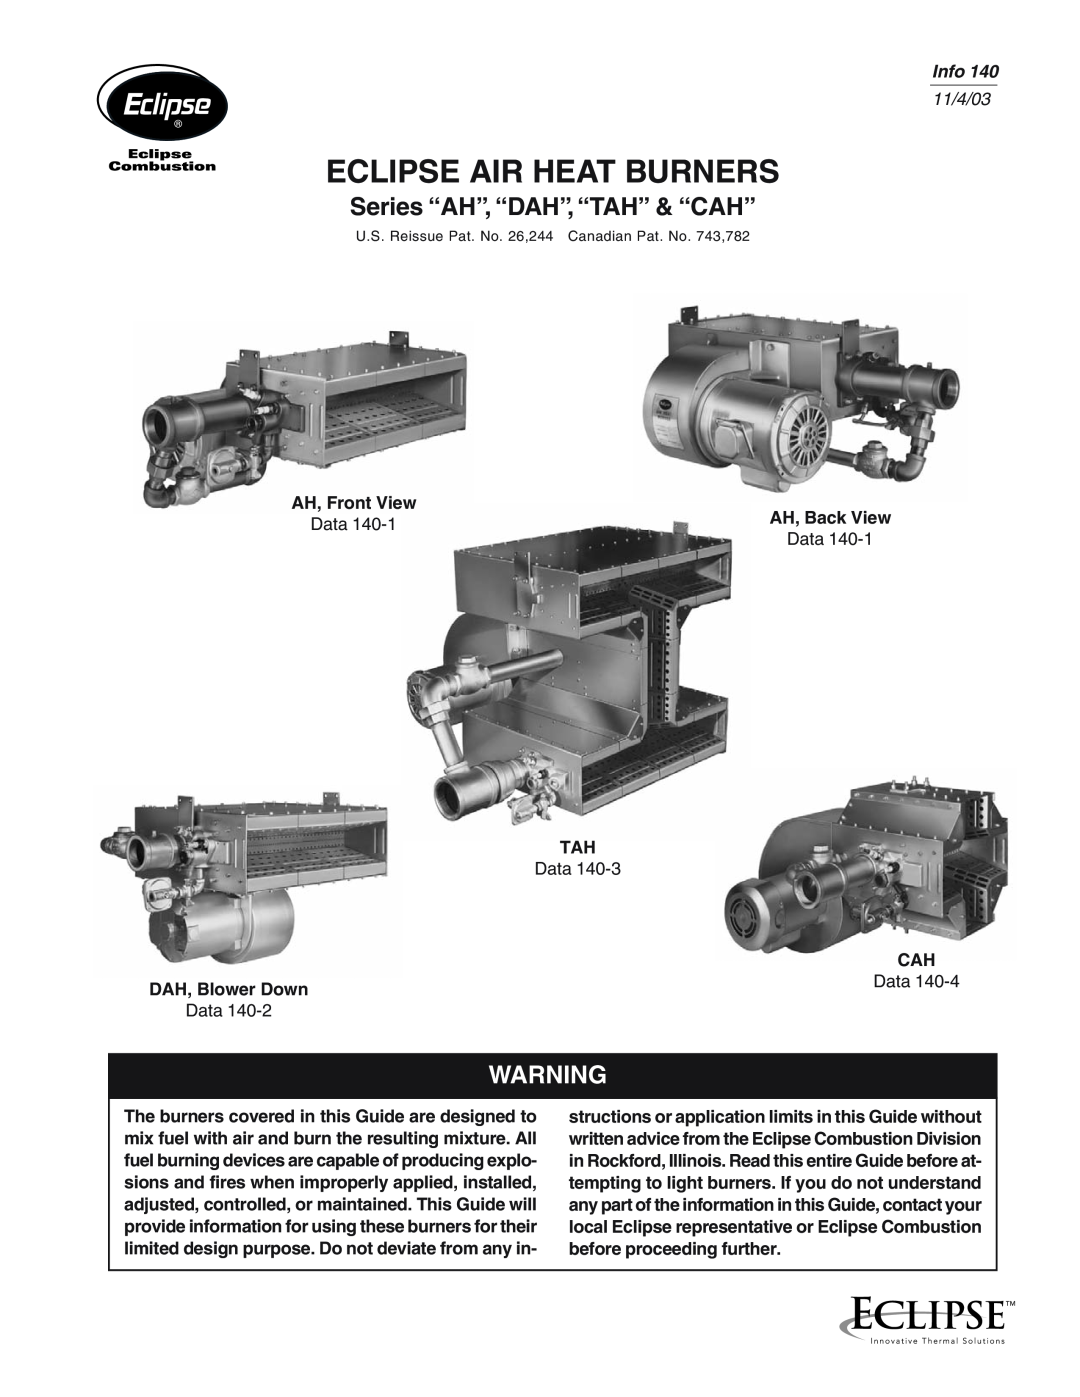 Eclipse Combustion manual Series “AH”, “DAH”, “TAH” & “CAH”, Info, Eclipse Air Heat Burners, 11/4/03 